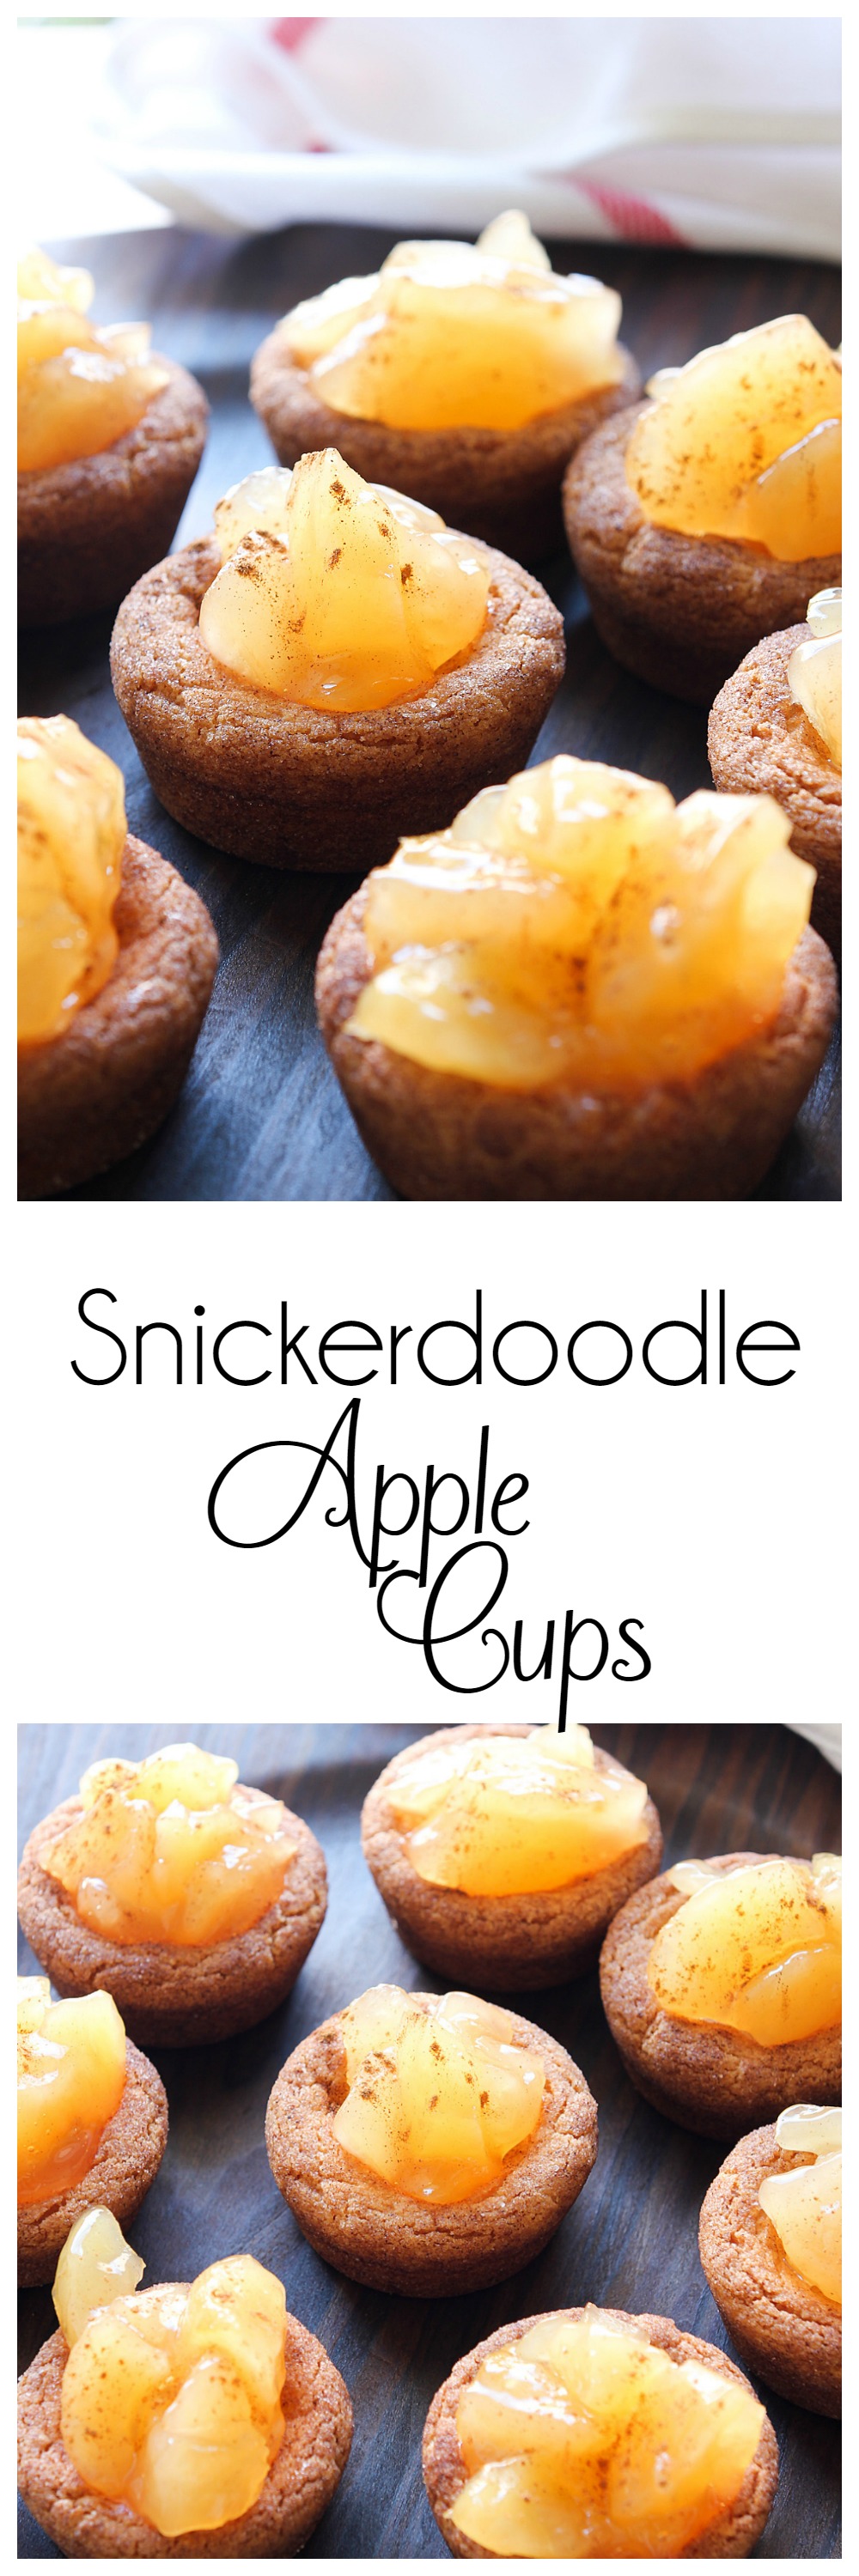 Snickerdoodle Apple Cups